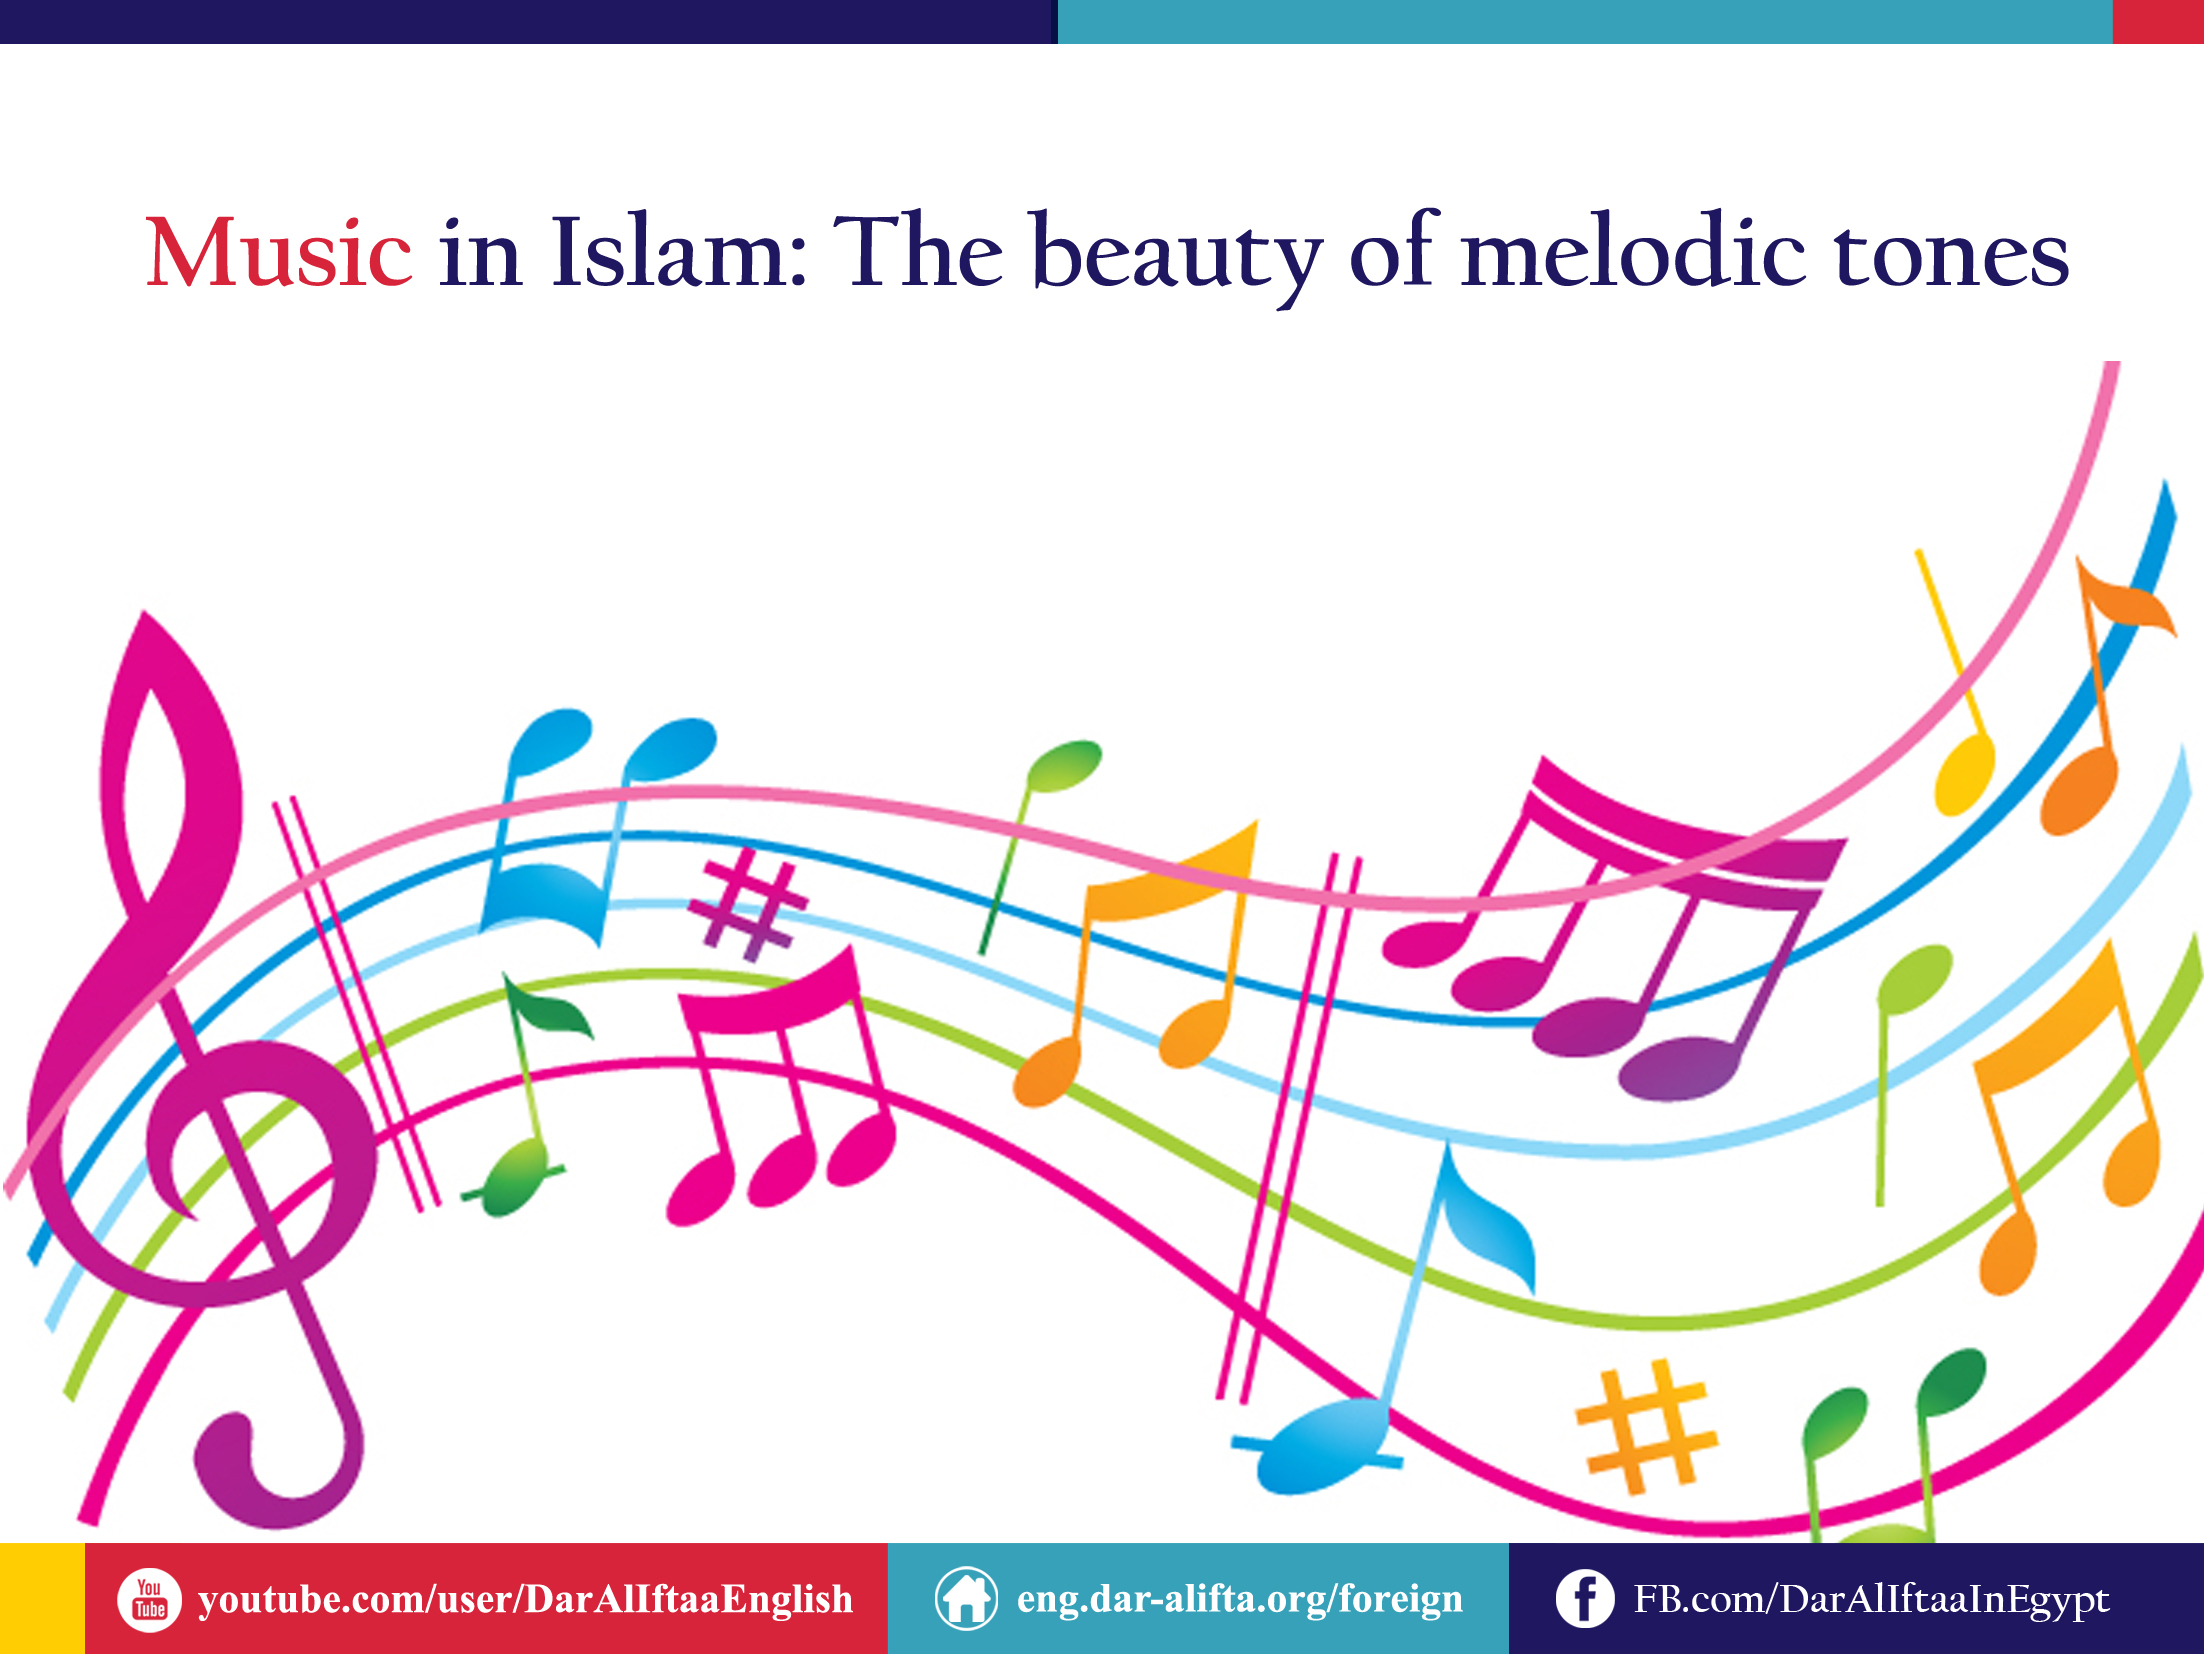 Music in Islam: The mathematical origin of melodic tones